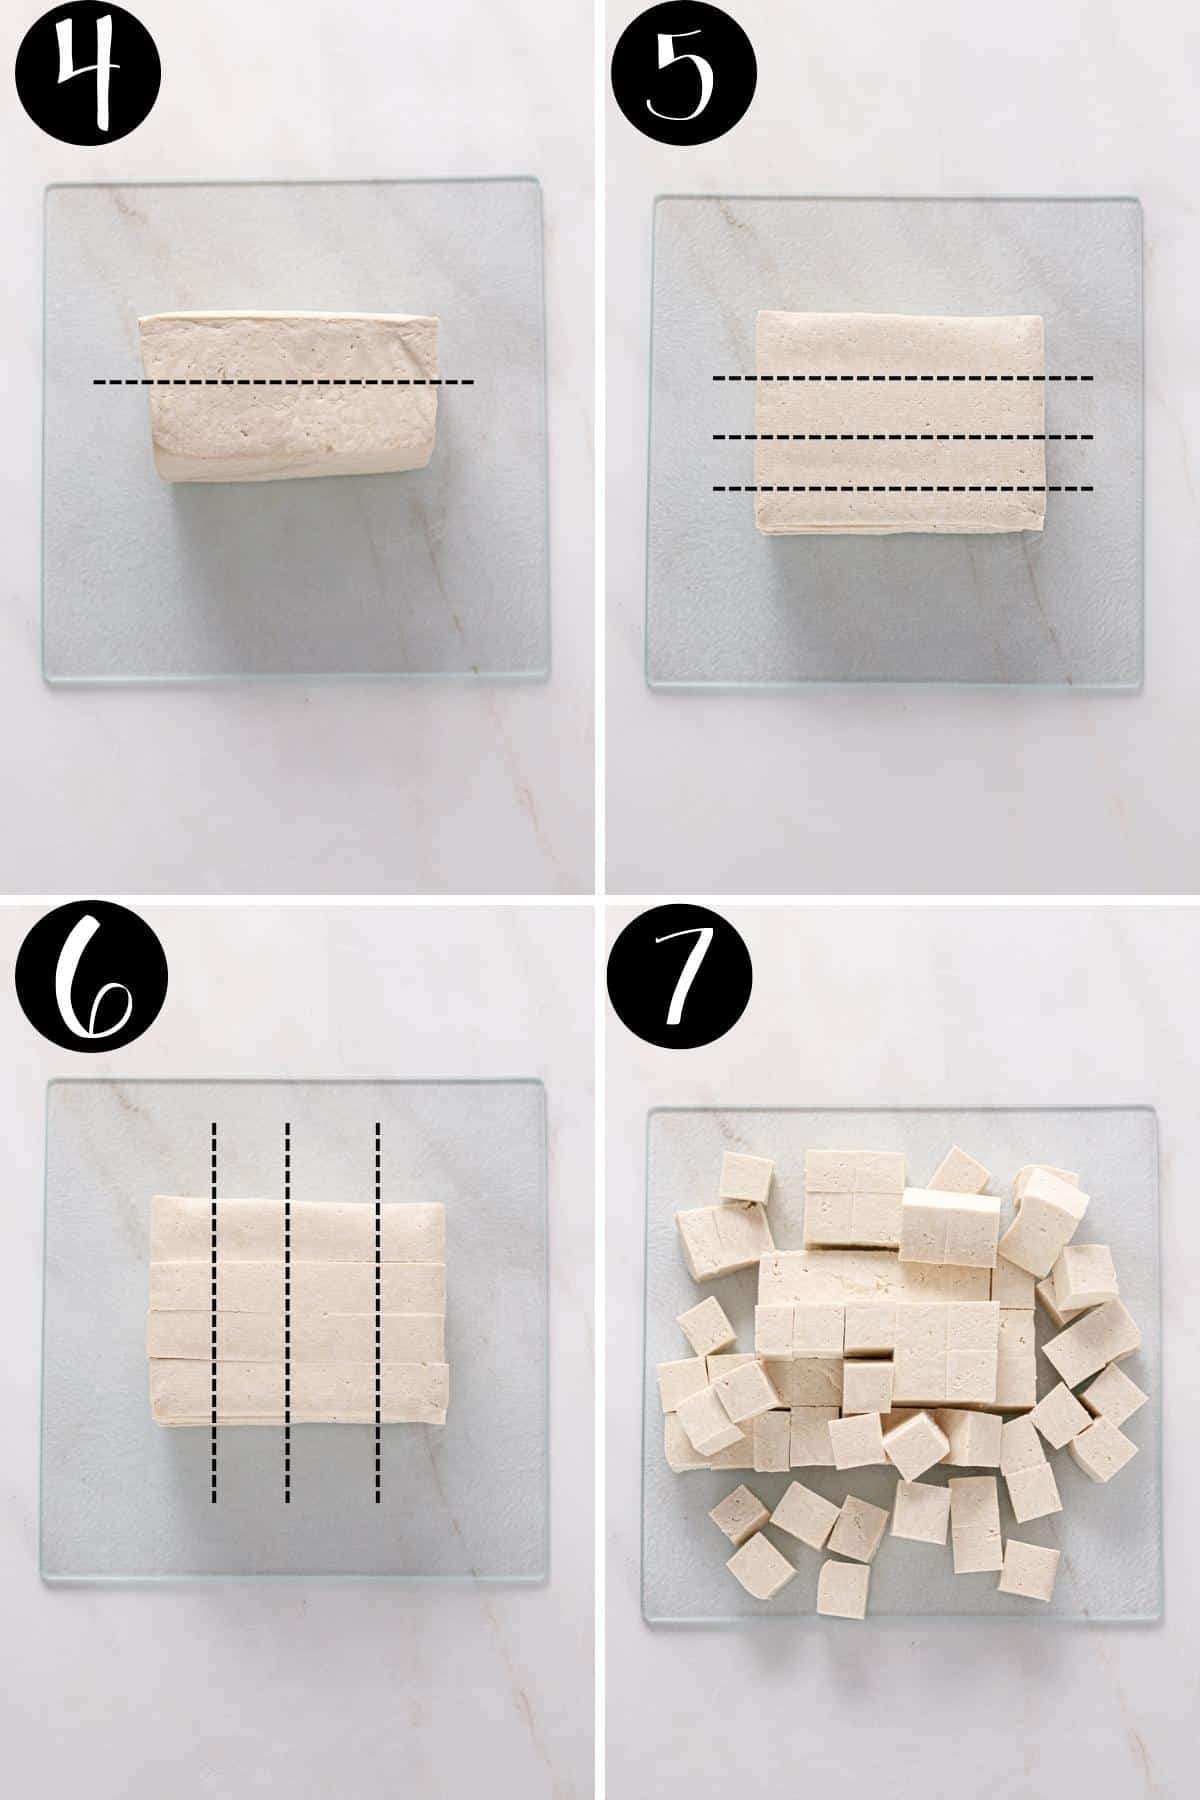 How to chop tofu step by step.